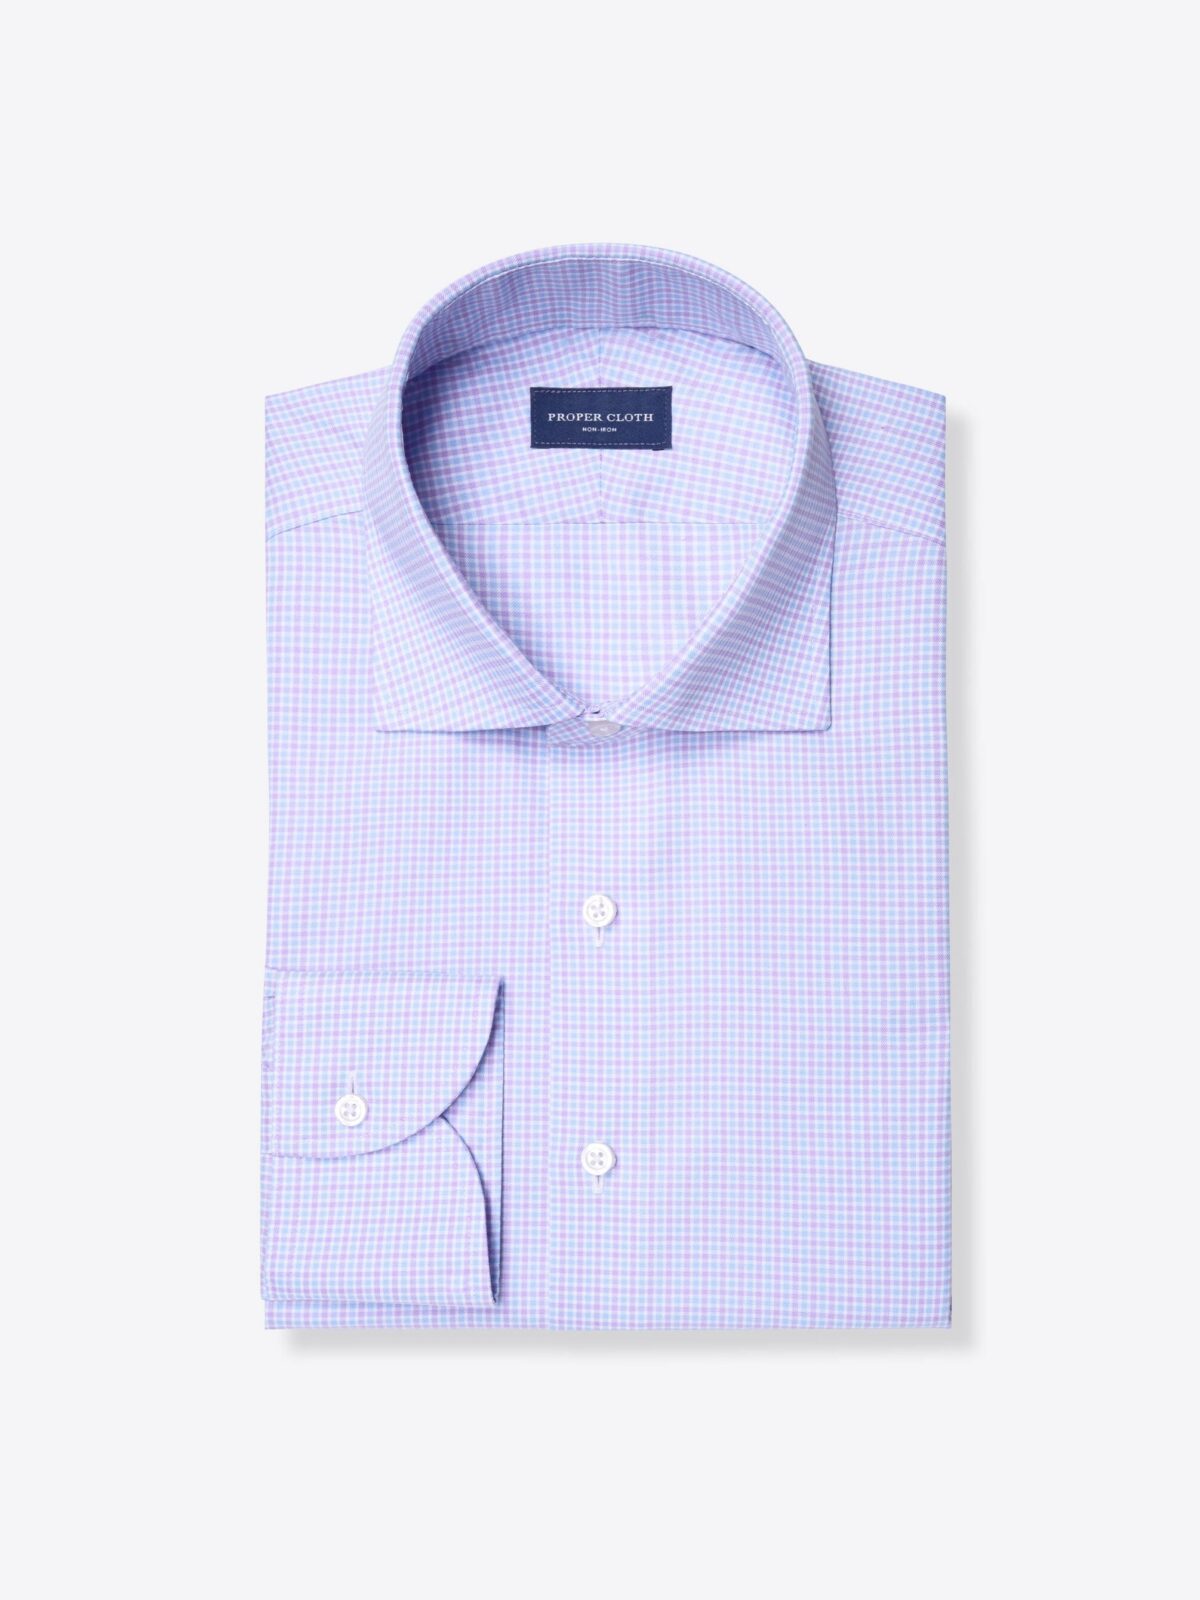 Non-Iron Supima Lavender and Blue Multi Gingham Custom Made Shirt Shirt ...